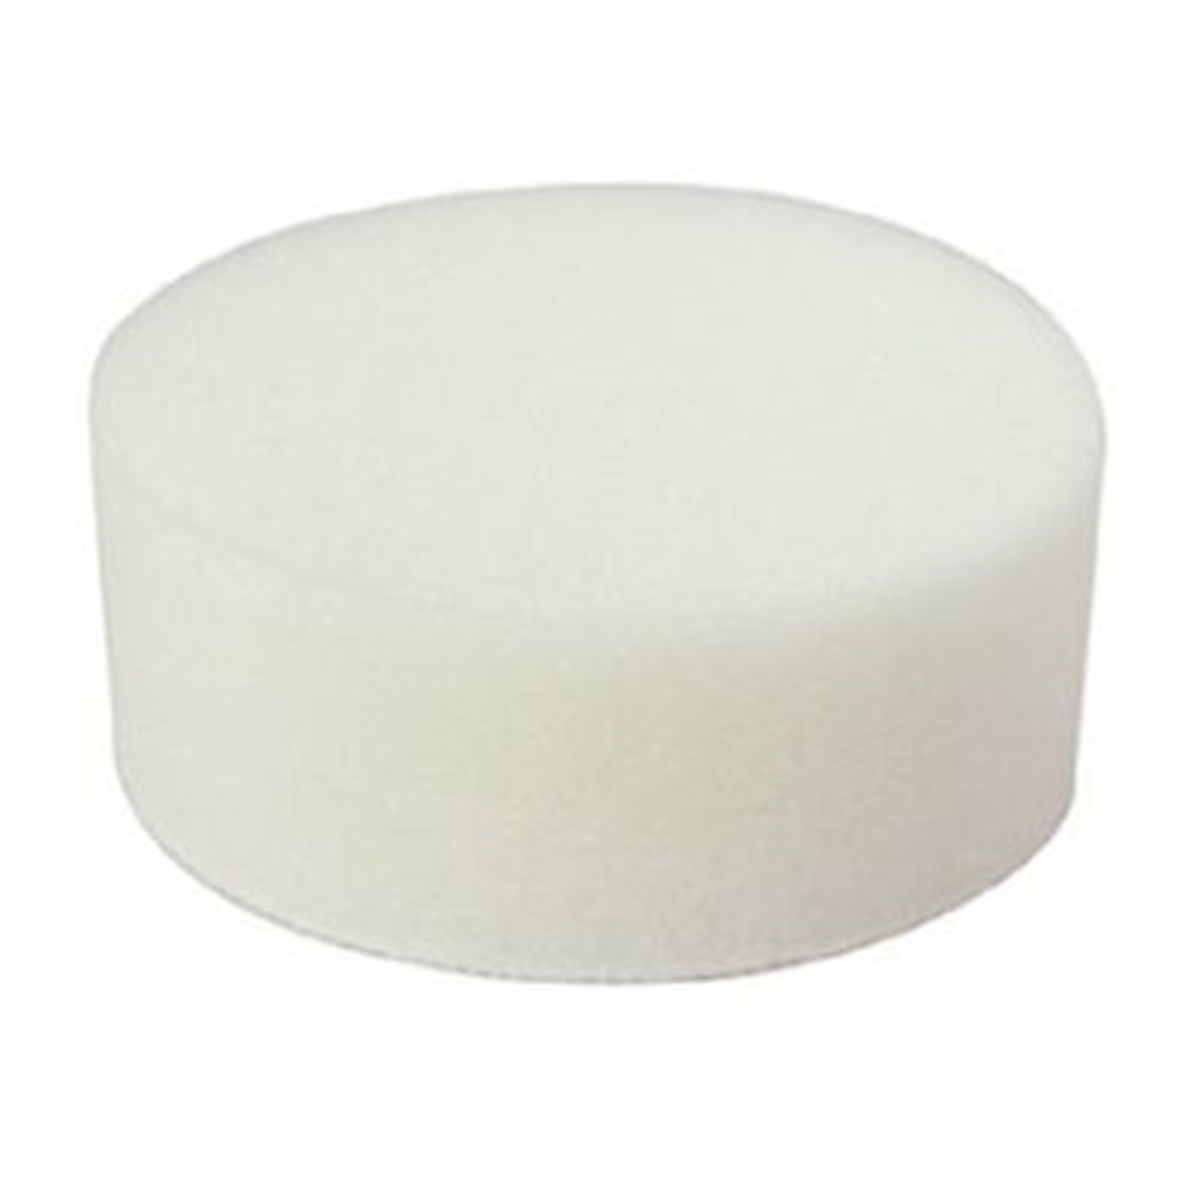 3 In Polishing Foam Pad - White